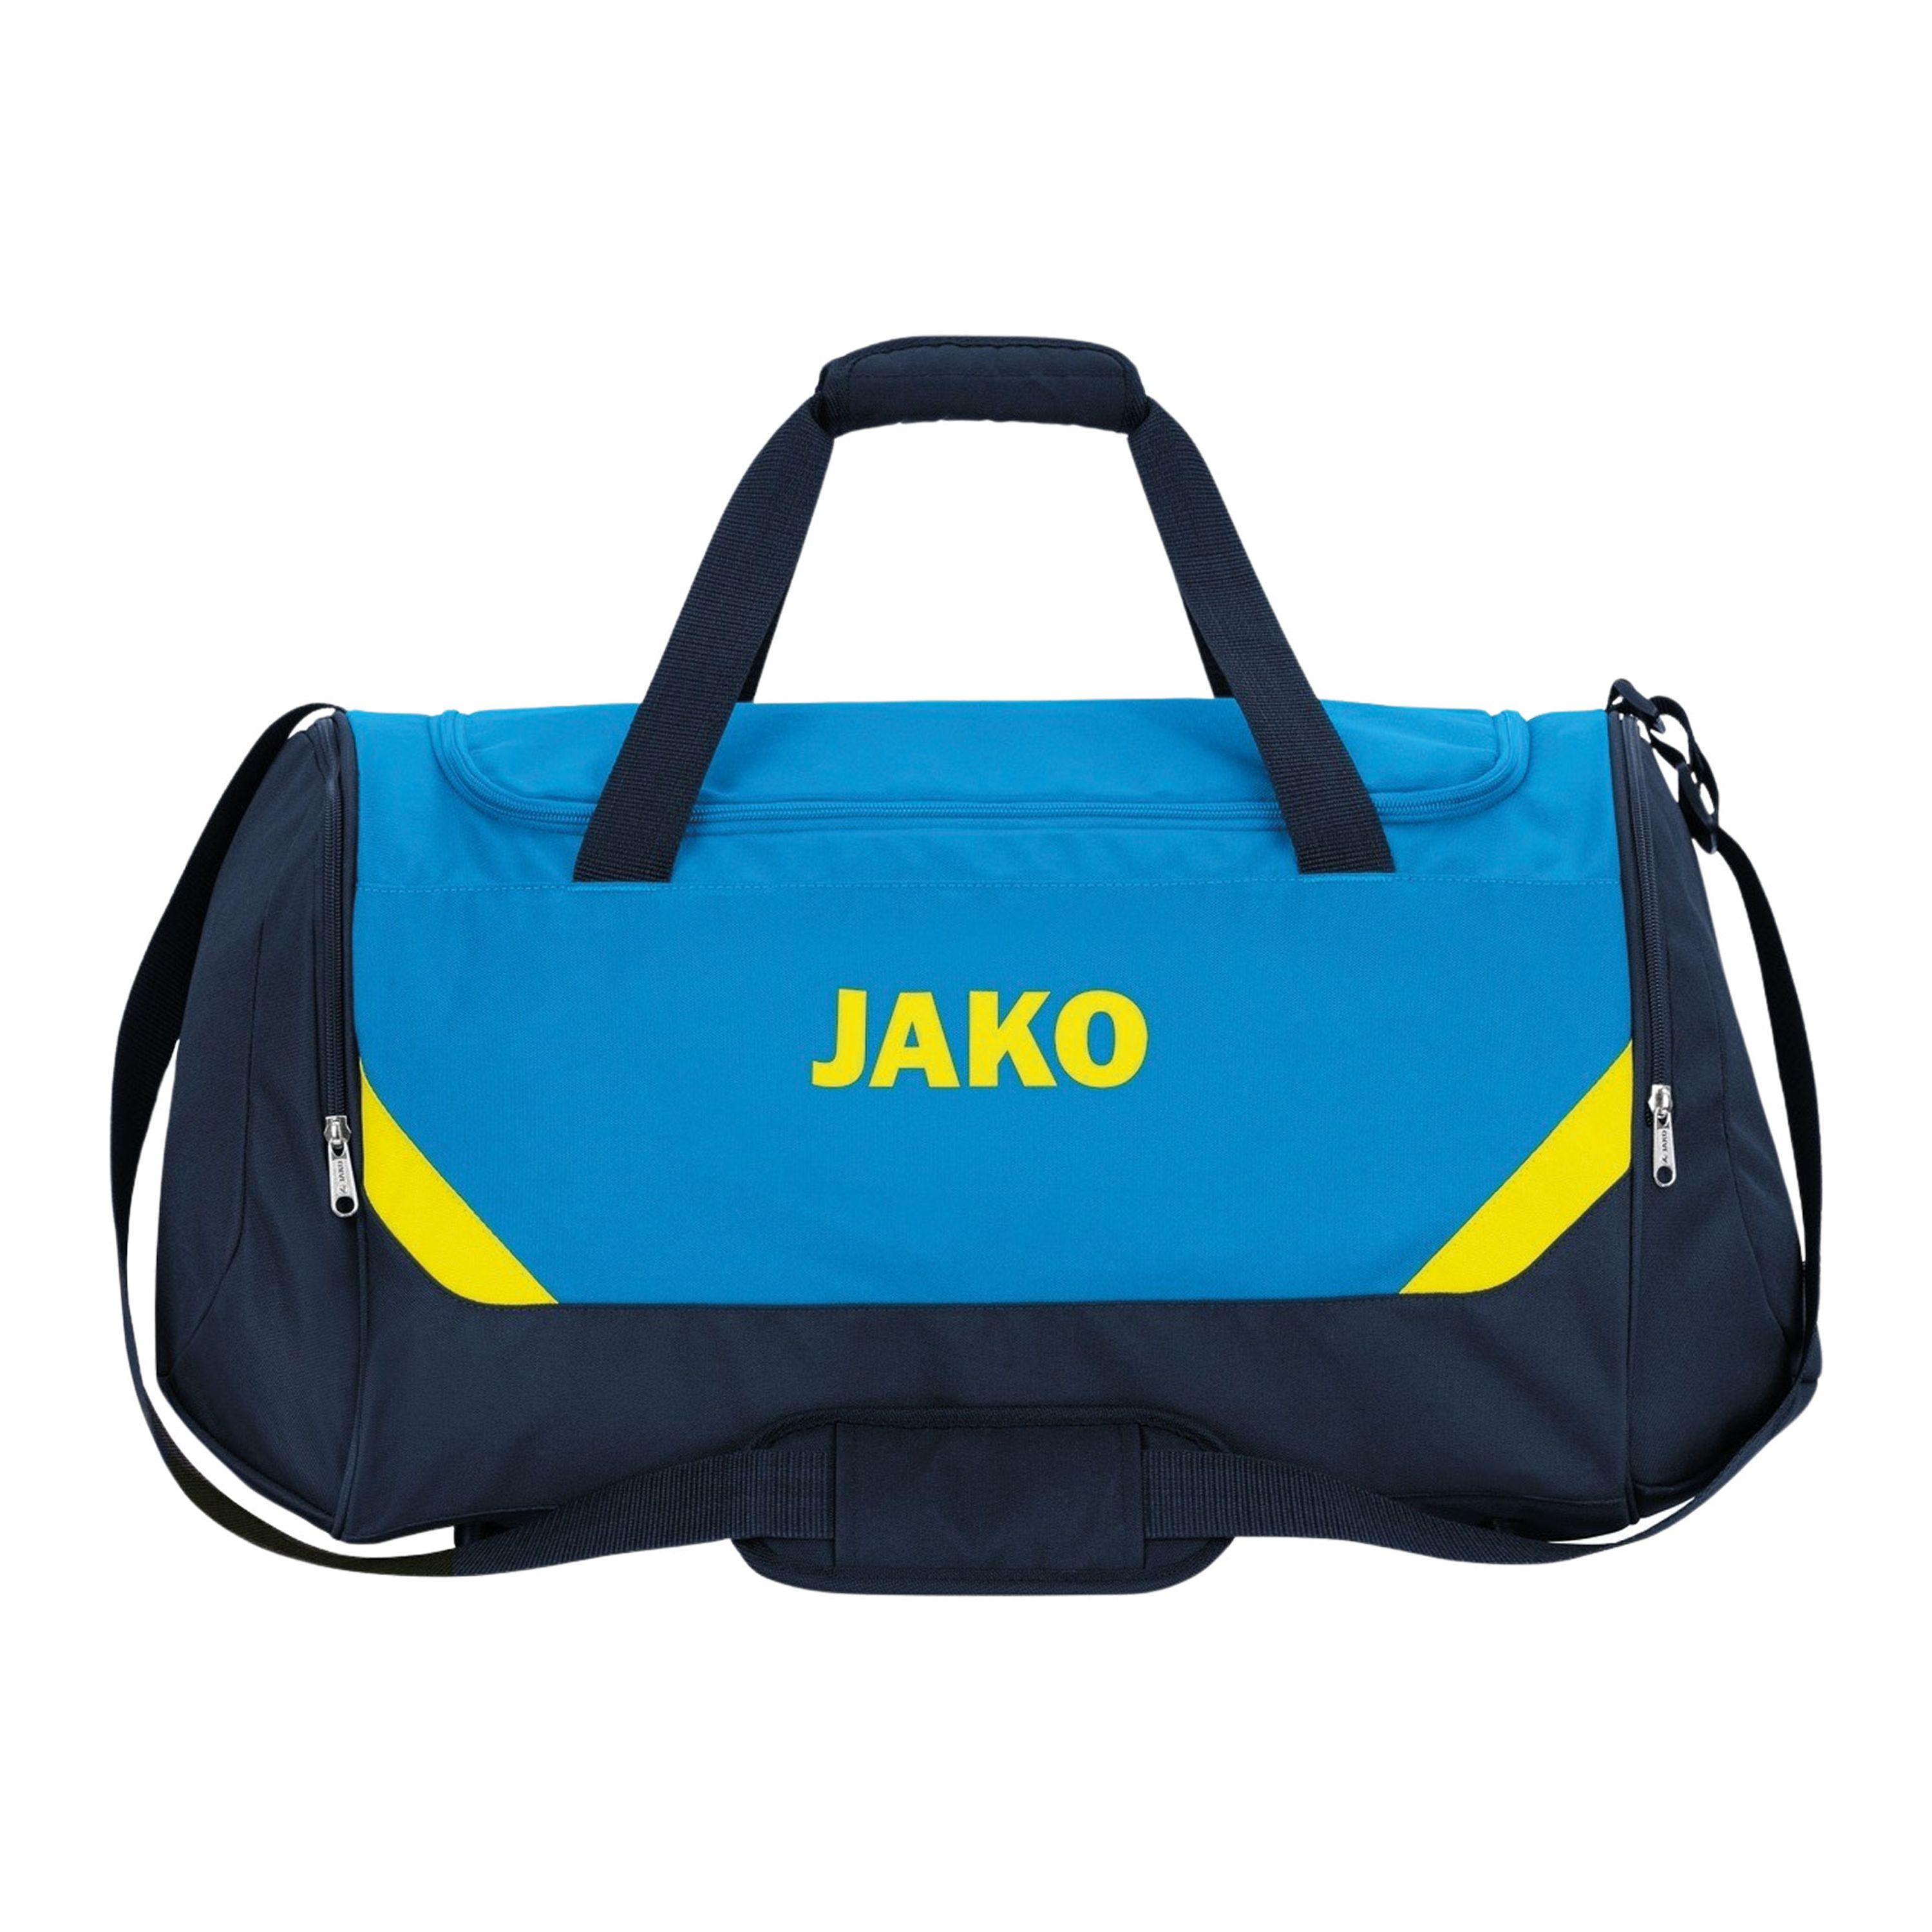 JAKO Iconic Sporttasche 444 - JAKO blau/marine/neongelb L (62 Liter)